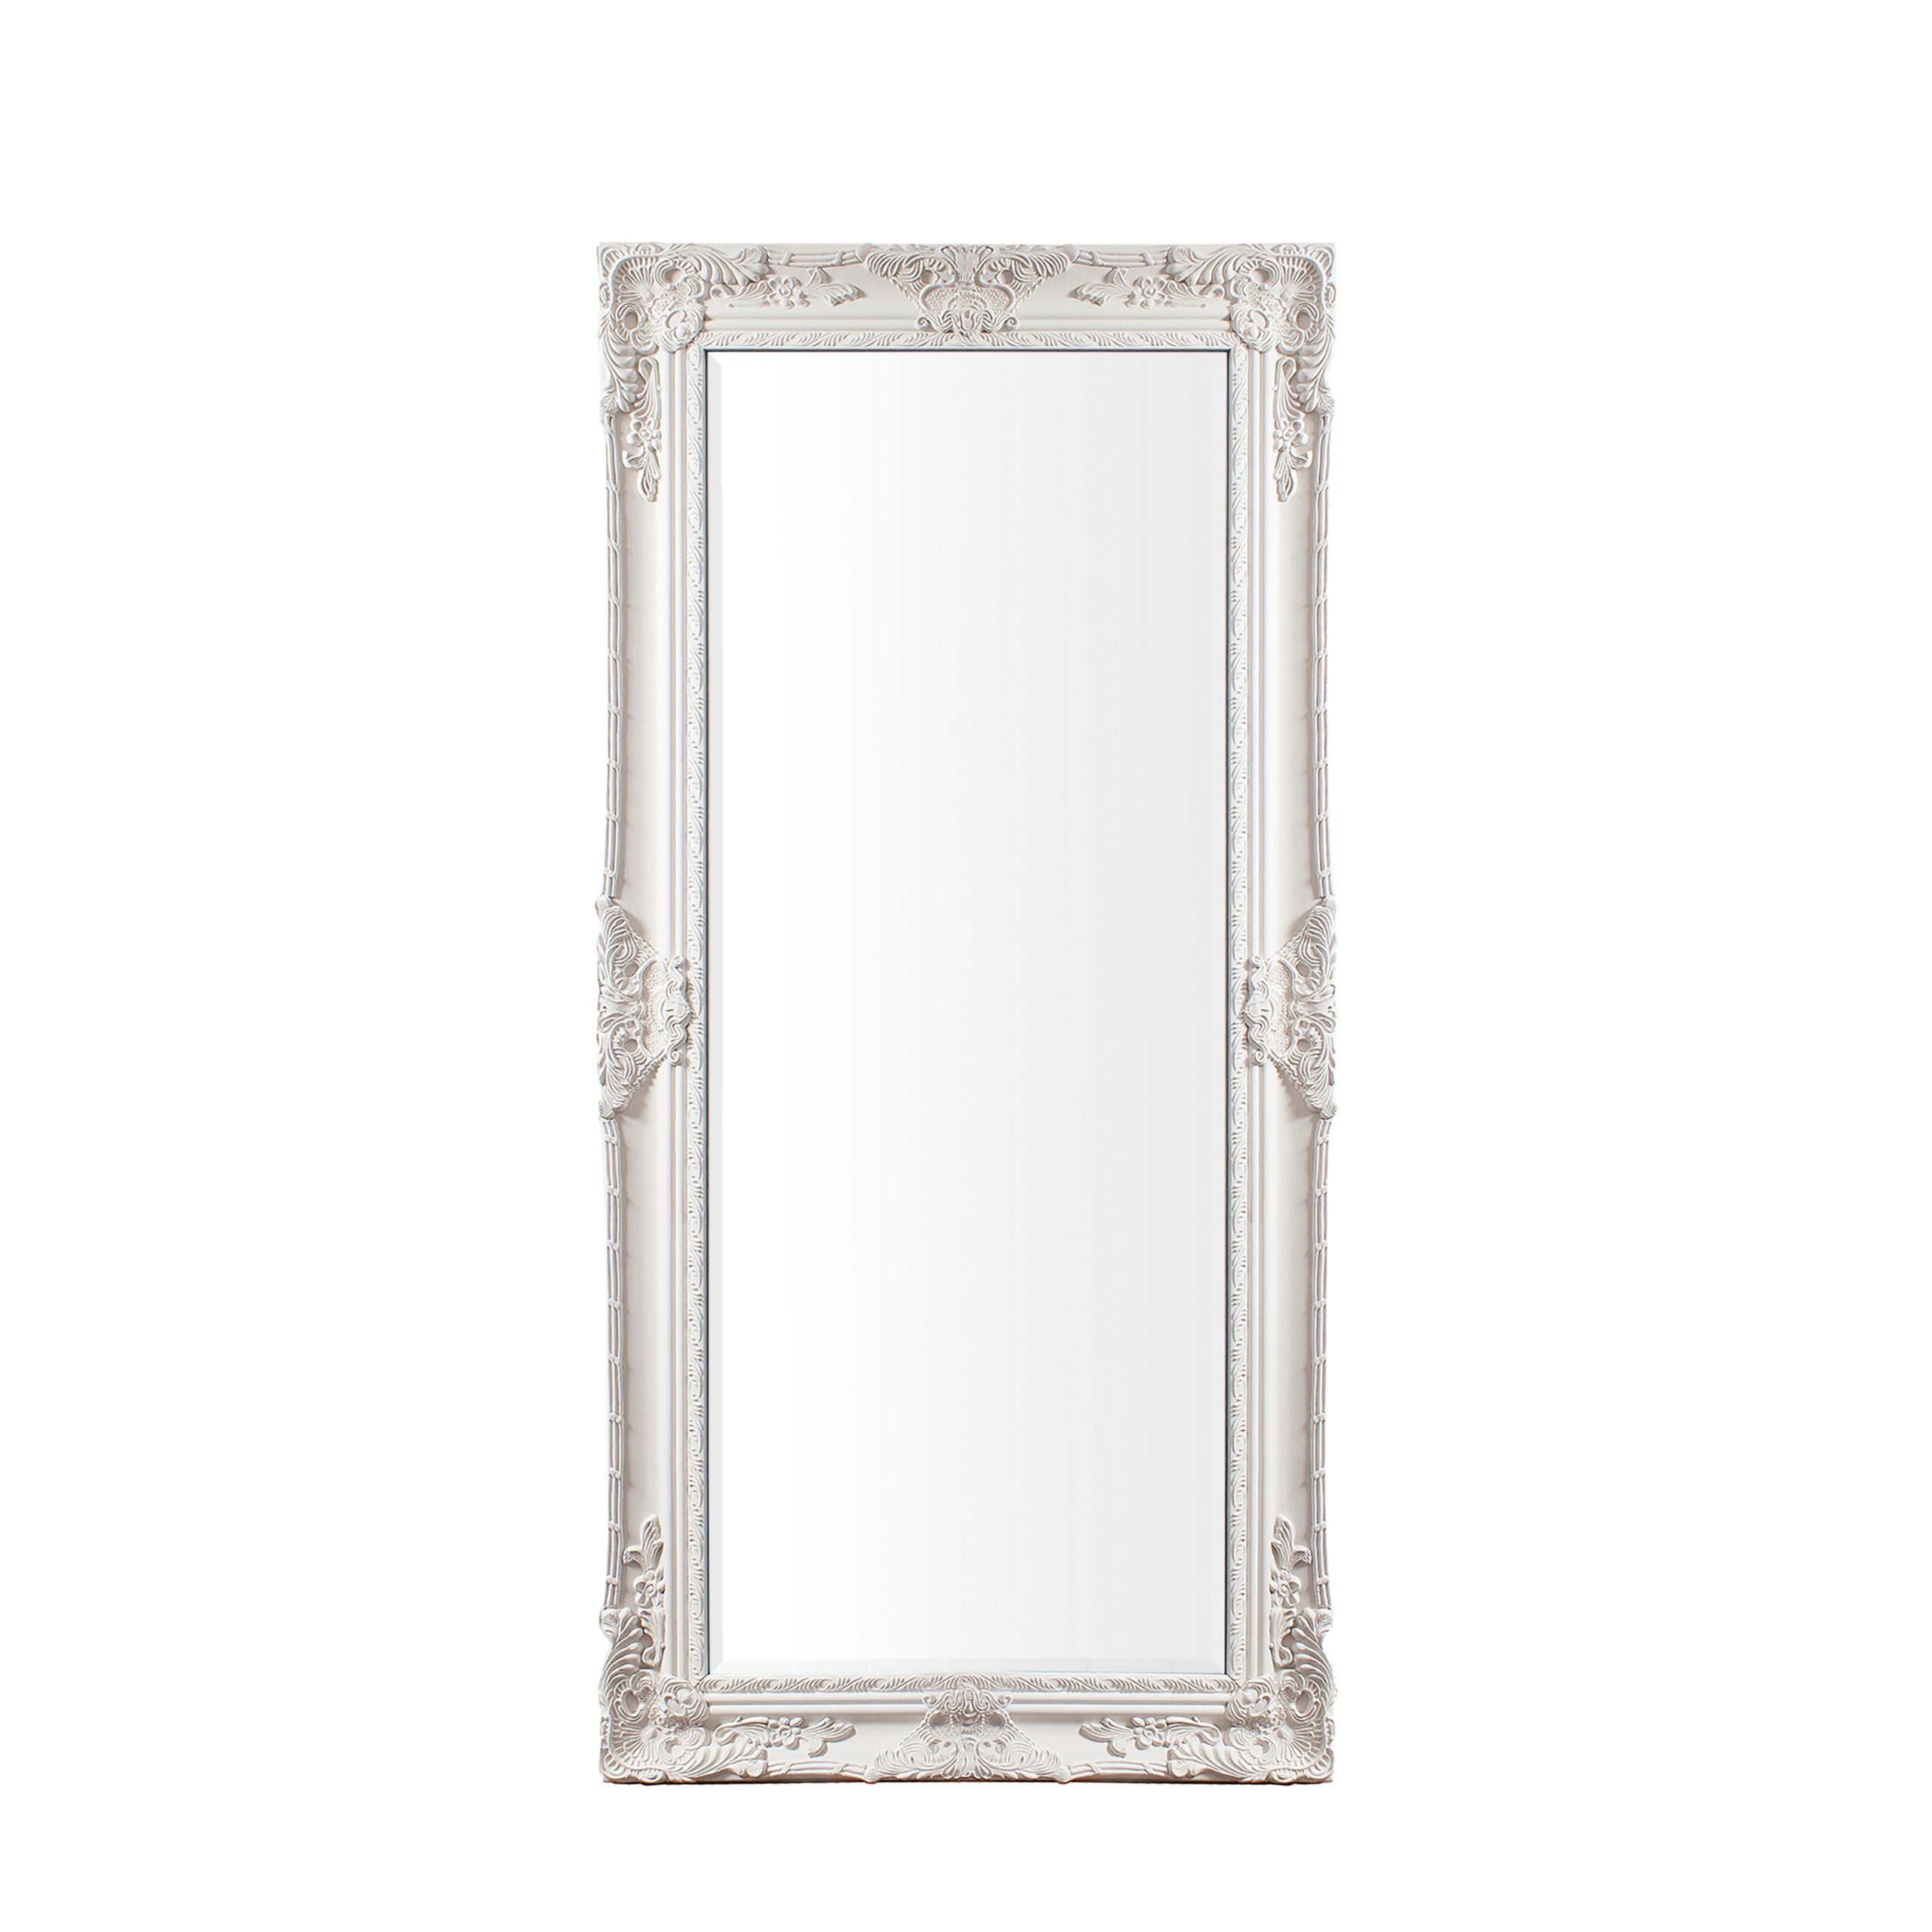 Gallery Direct Hampshire Leaner Mirror Cream